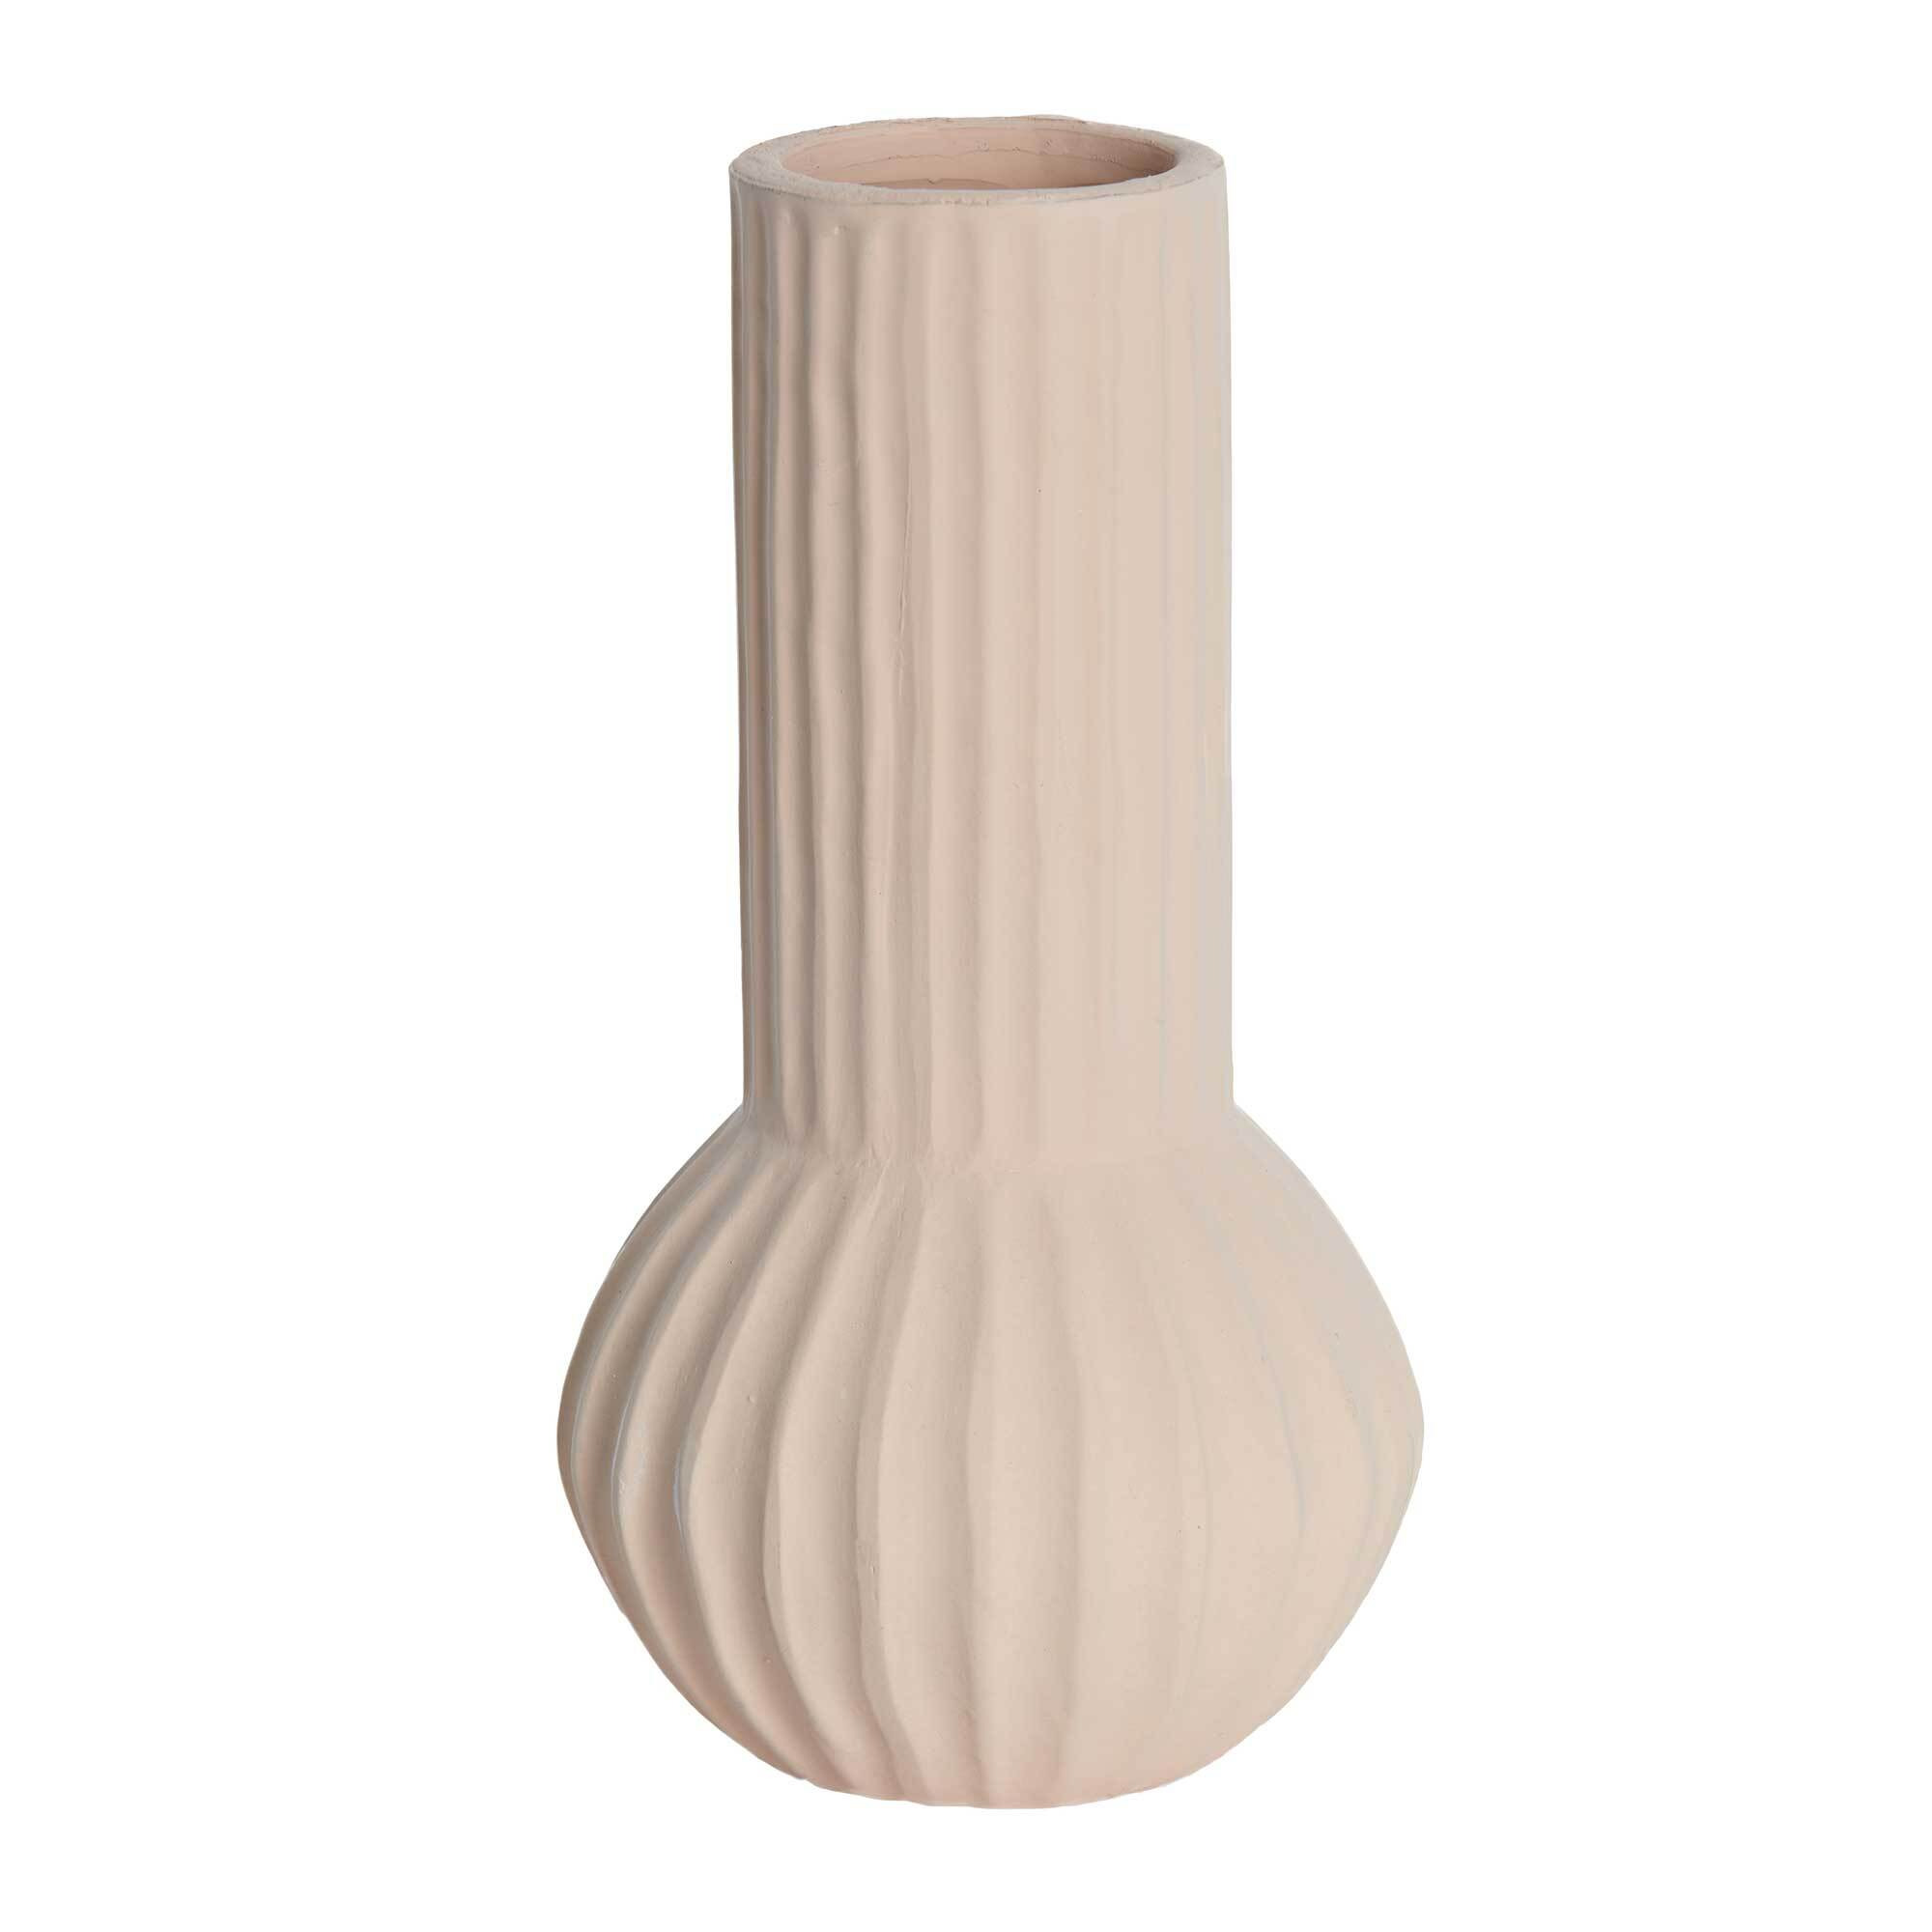 Sand Stripe Vase, Orange Ceramic - Barker & Stonehouse - image 1